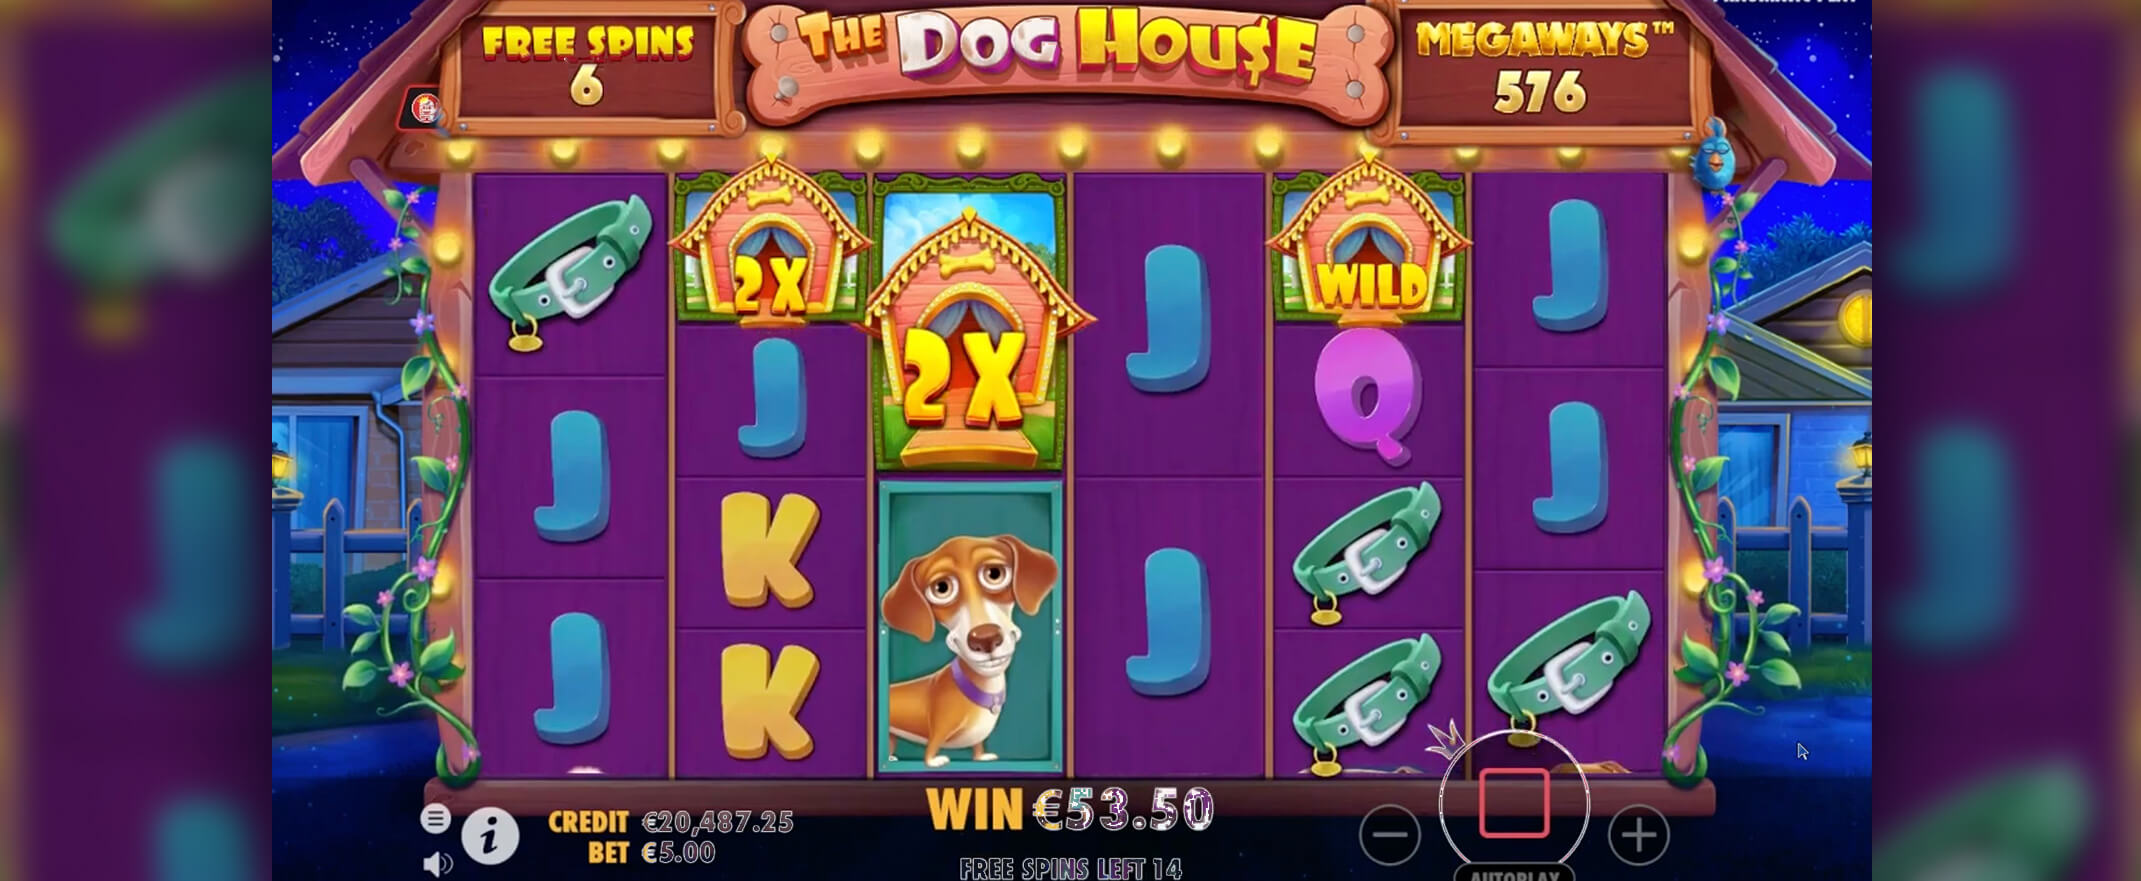 The Dog House Megaways screenshot